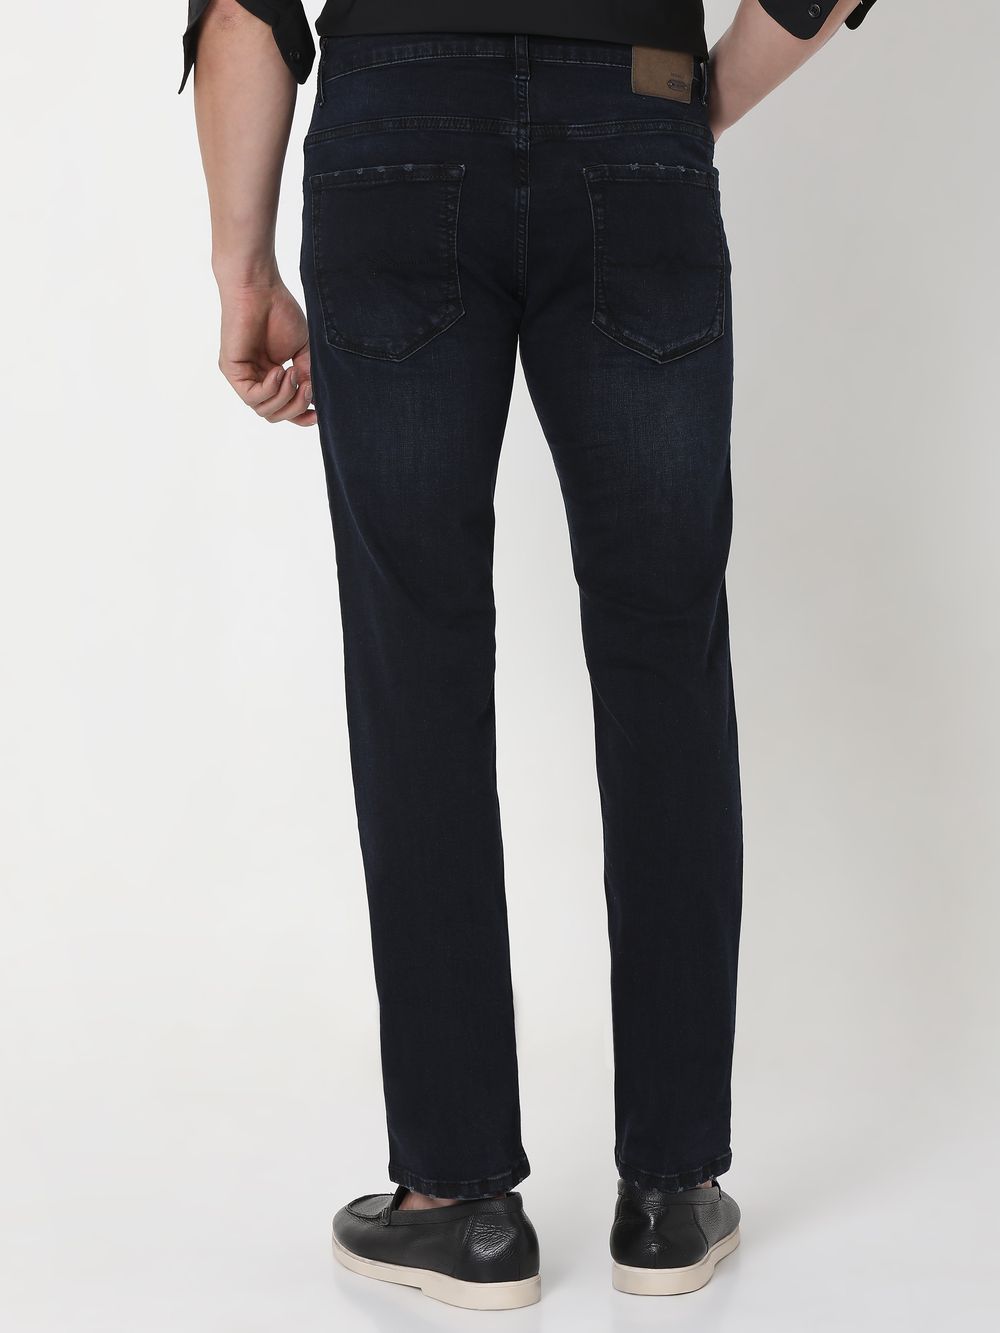 Blue Black Narrow Fit Originals Stretch Jeans